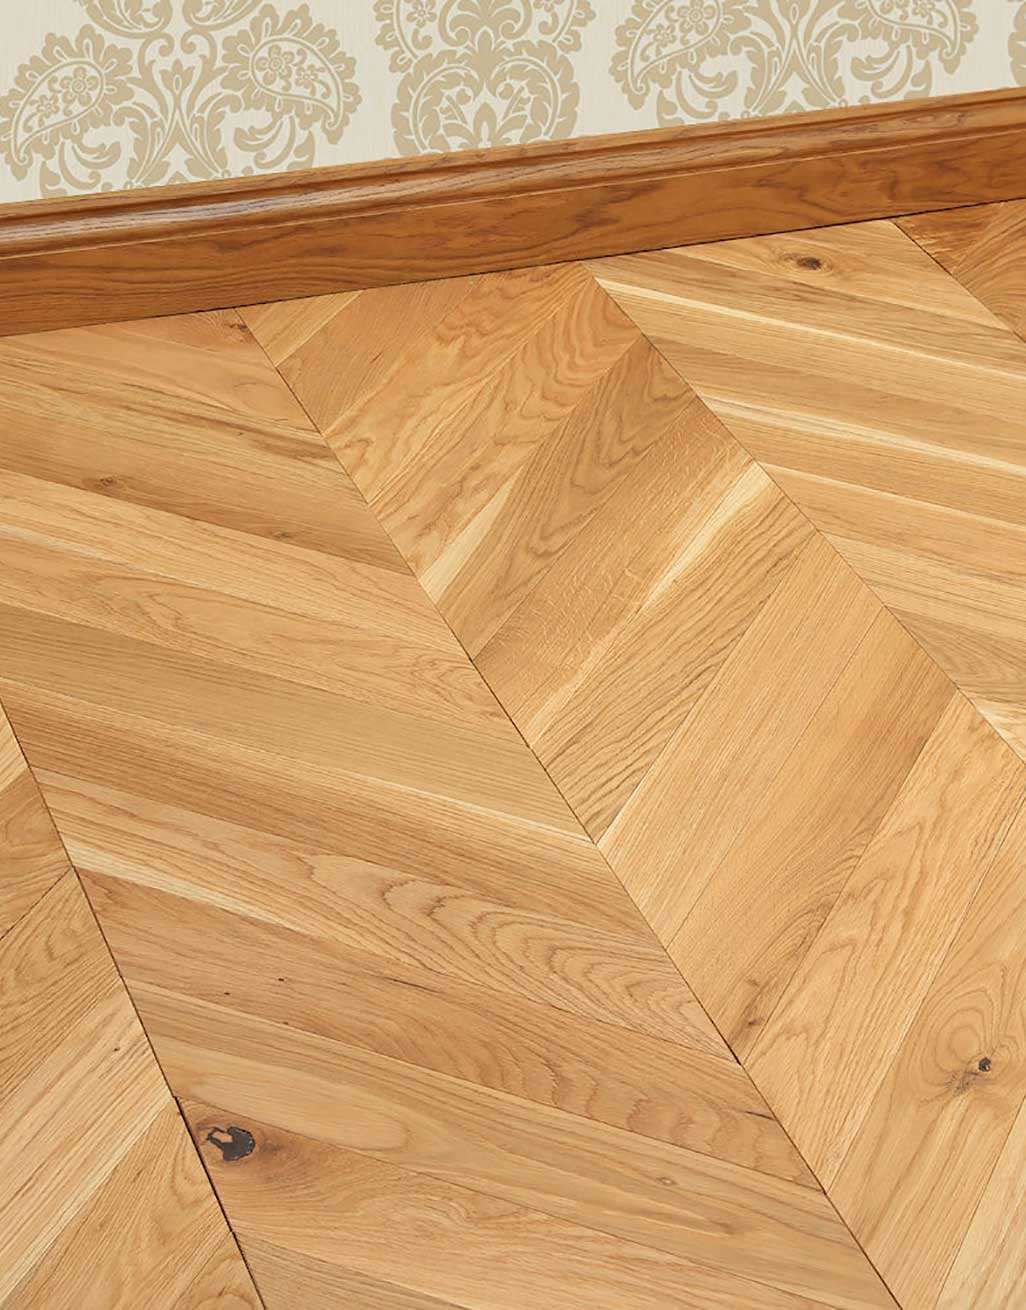 Park Avenue Chevron Natural Oak Brushed & Oiled Solid Wood Flooring 6